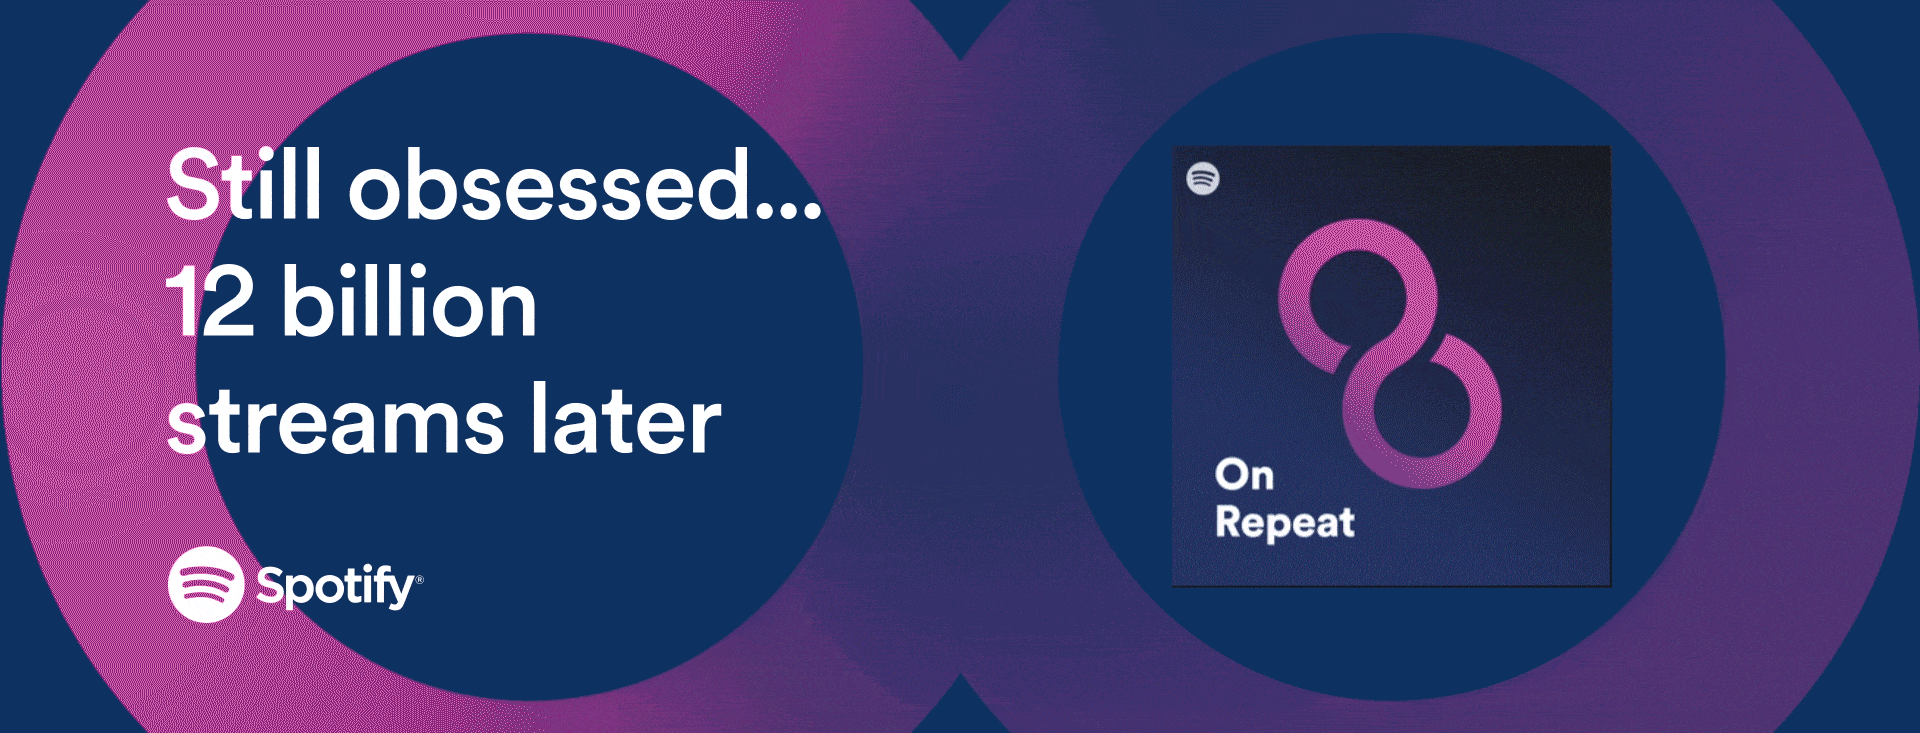 Spotify’s ‘On Repeat’ playlist has powered 12 billion streams!